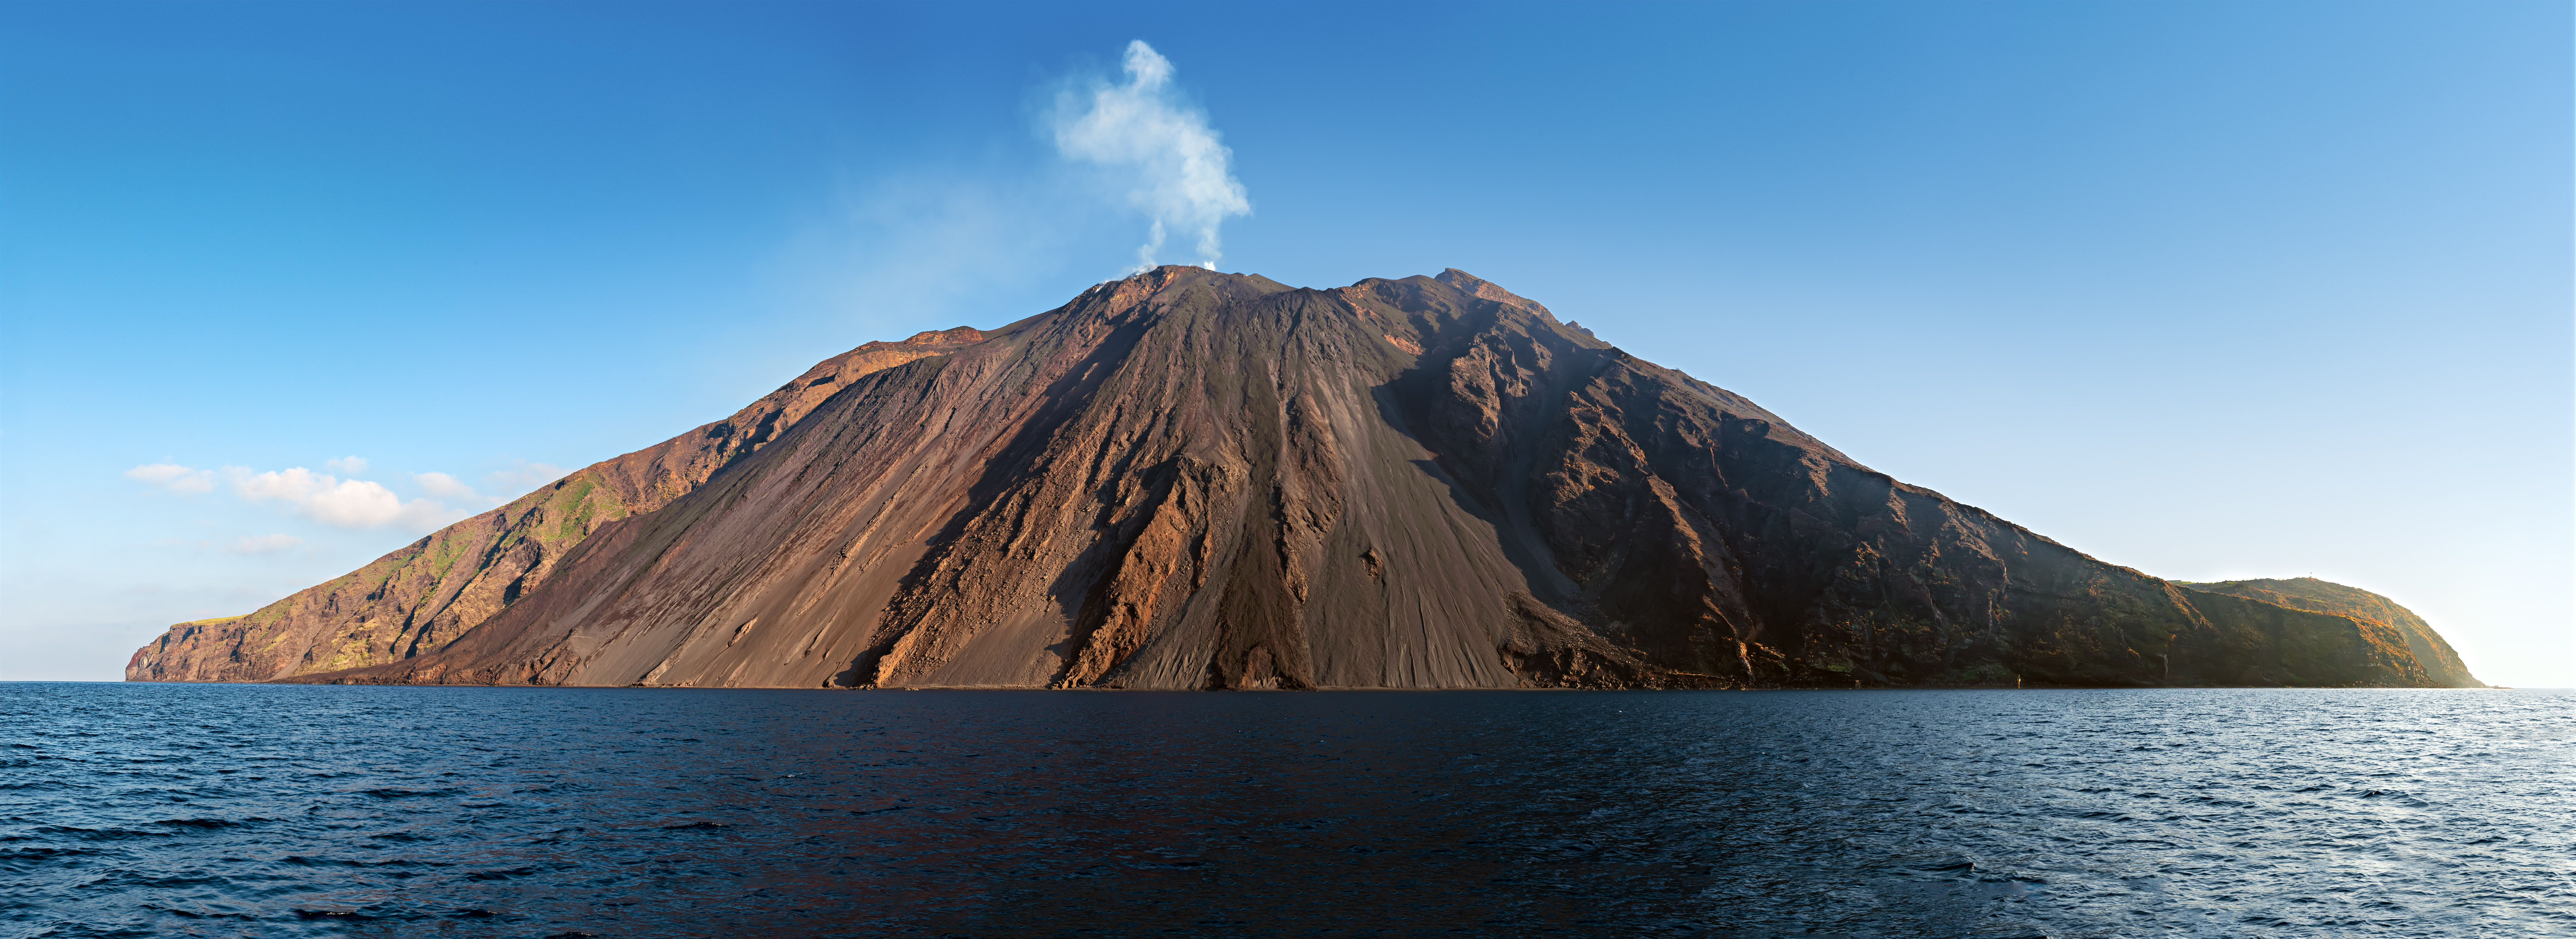 Stromboli-Vulkan in den Liparische Inseln © ThomasLENNE